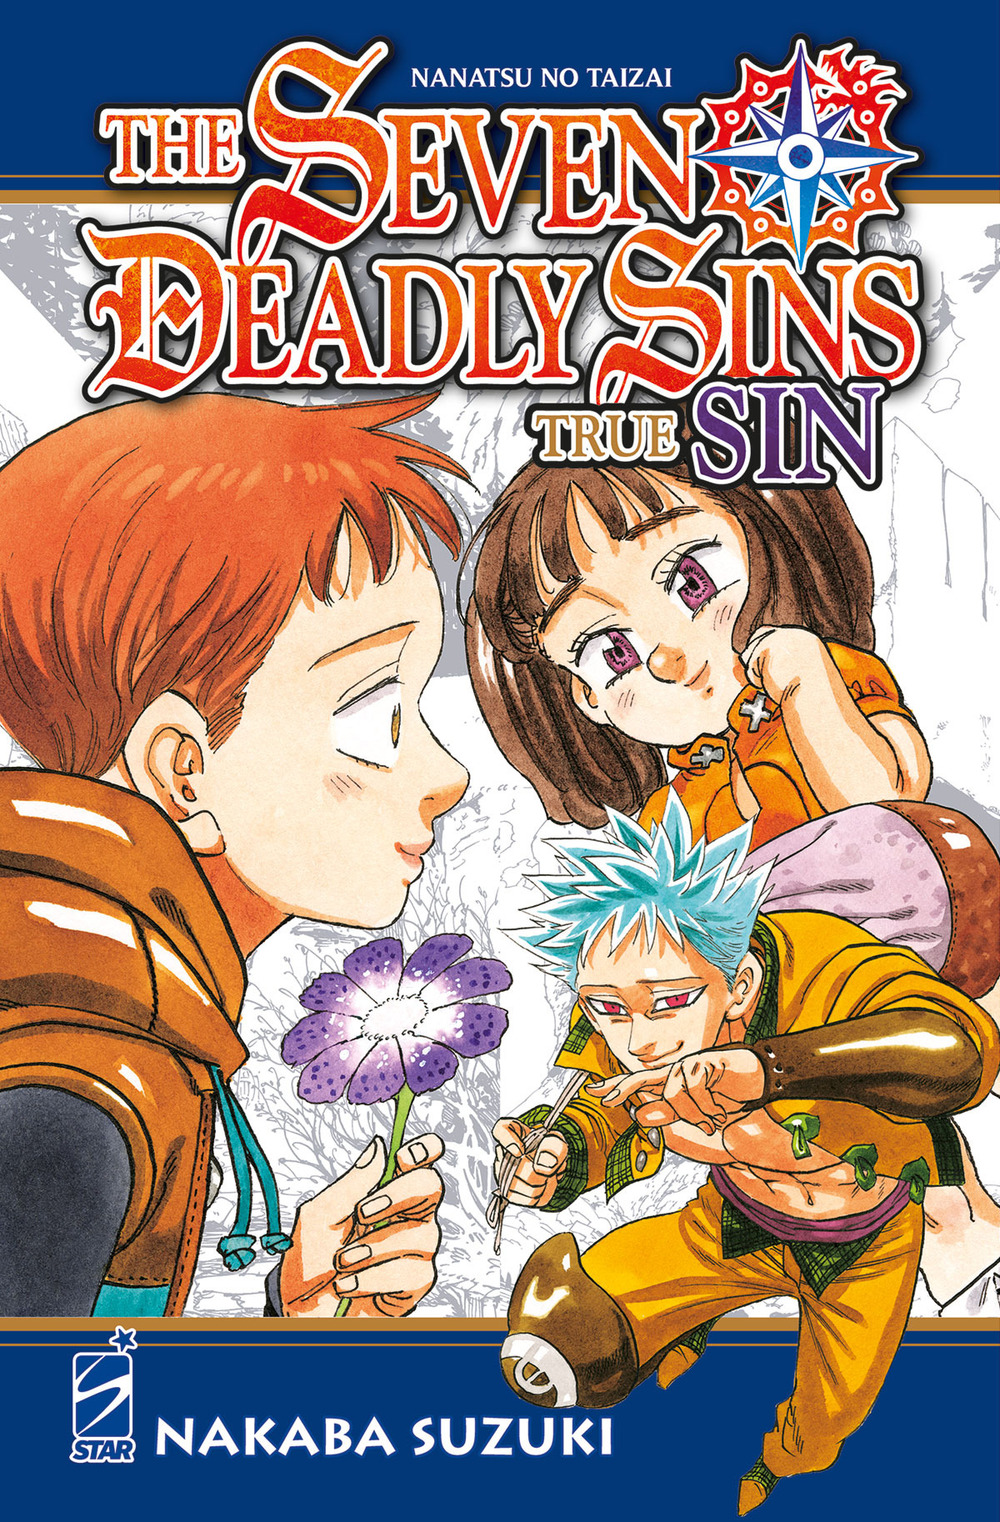 True sin. The seven deadly sins